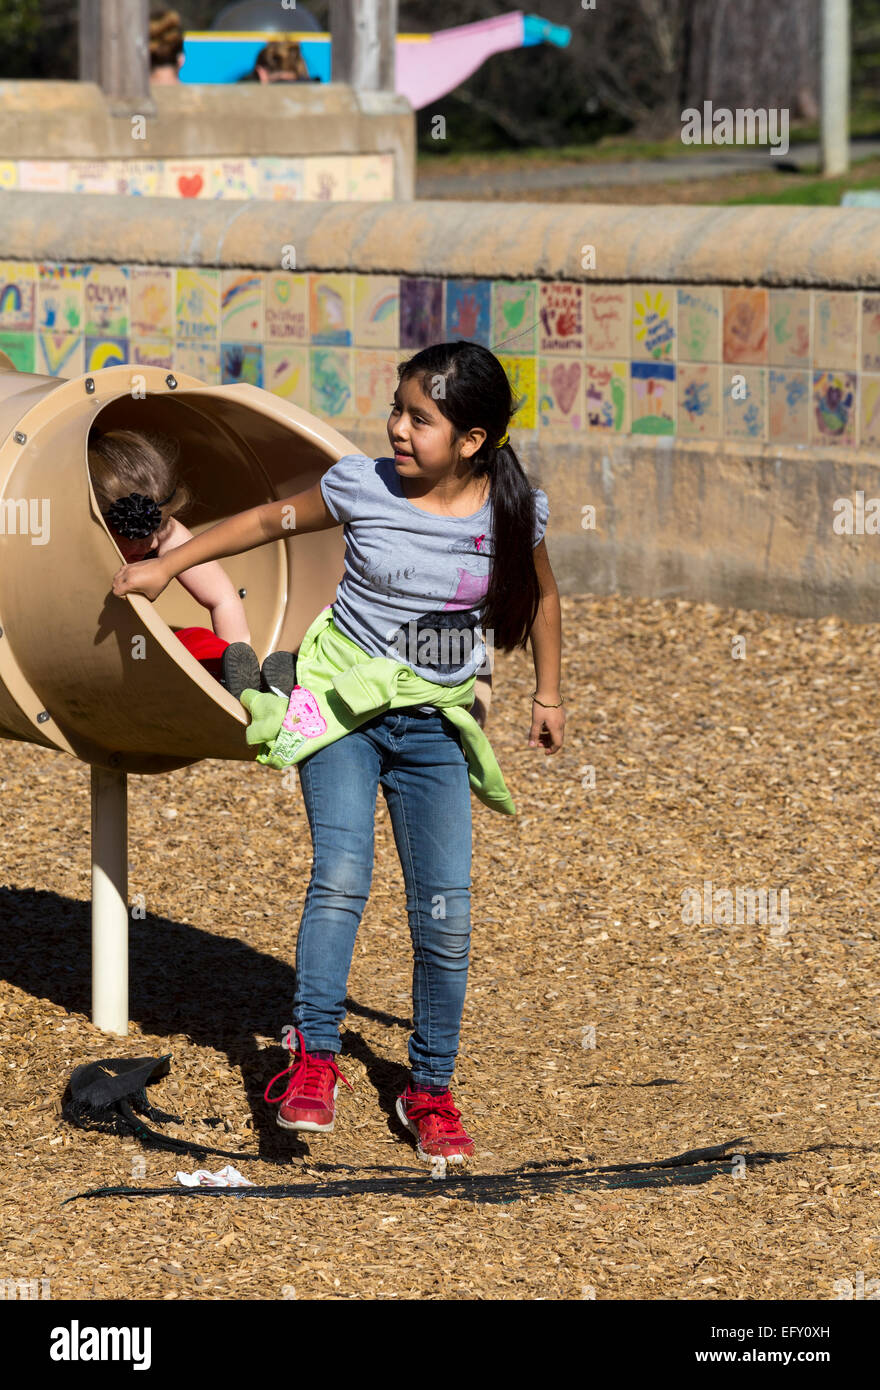 Hispanic girl, young girl, girl, tubular slide, playground, Pioneer Park, Novato, California, United States, North America Stock Photo